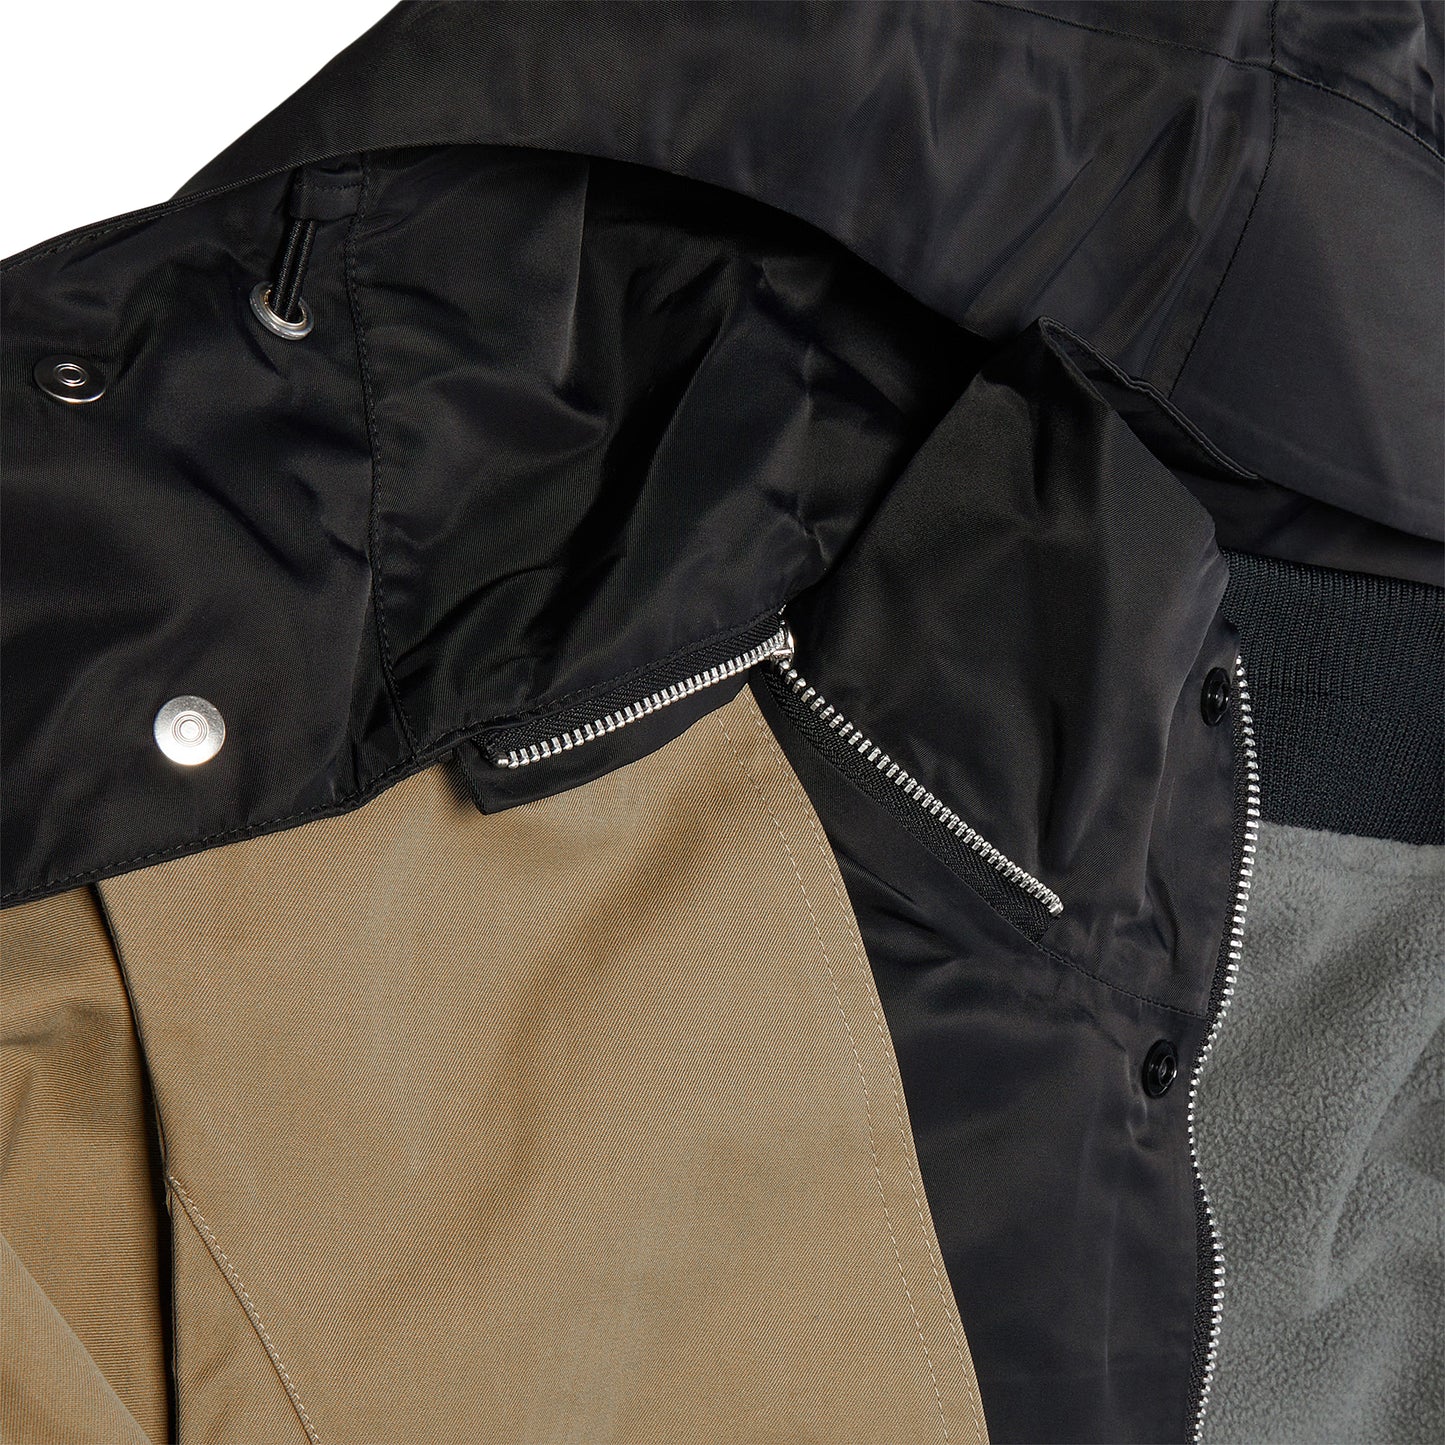 Nike x Feng Chen Wang Transform Jacket (Black/Khaki)